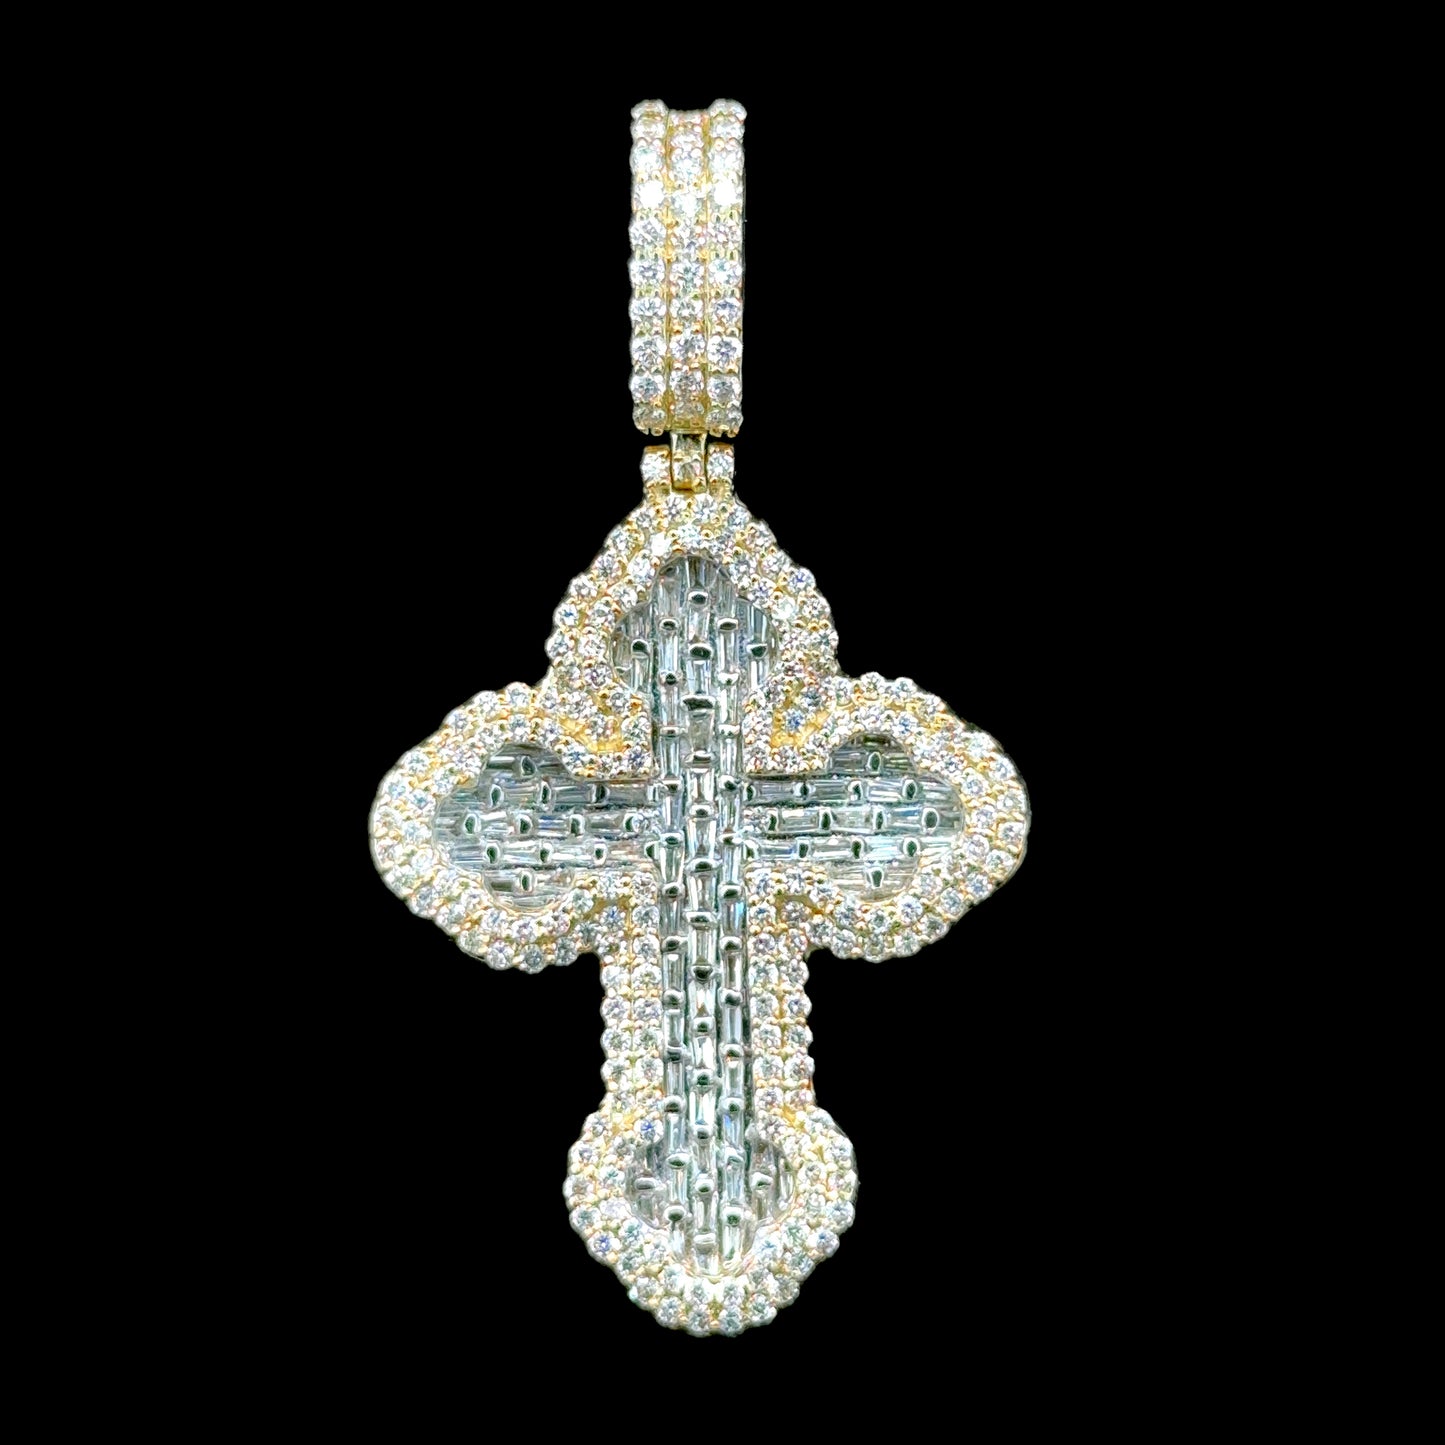 10K yellow gold diamond cross pendant with 2.47 carats of sparkling diamonds